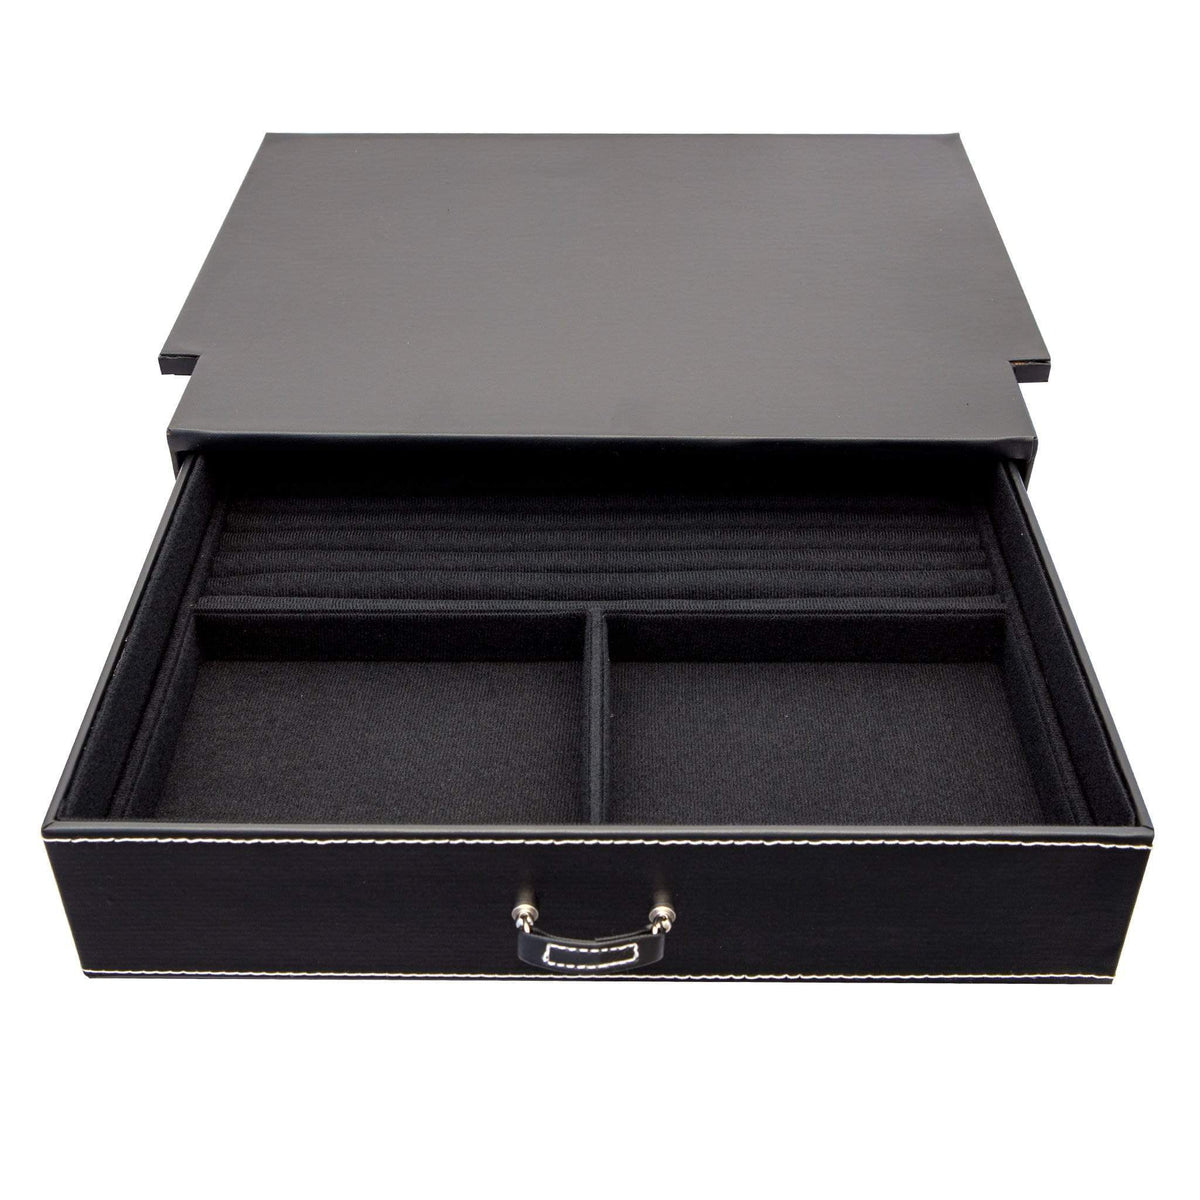 Accessory - Storage - Jewelry Drawer - 15 inch - under shelf mount - 50 size safes